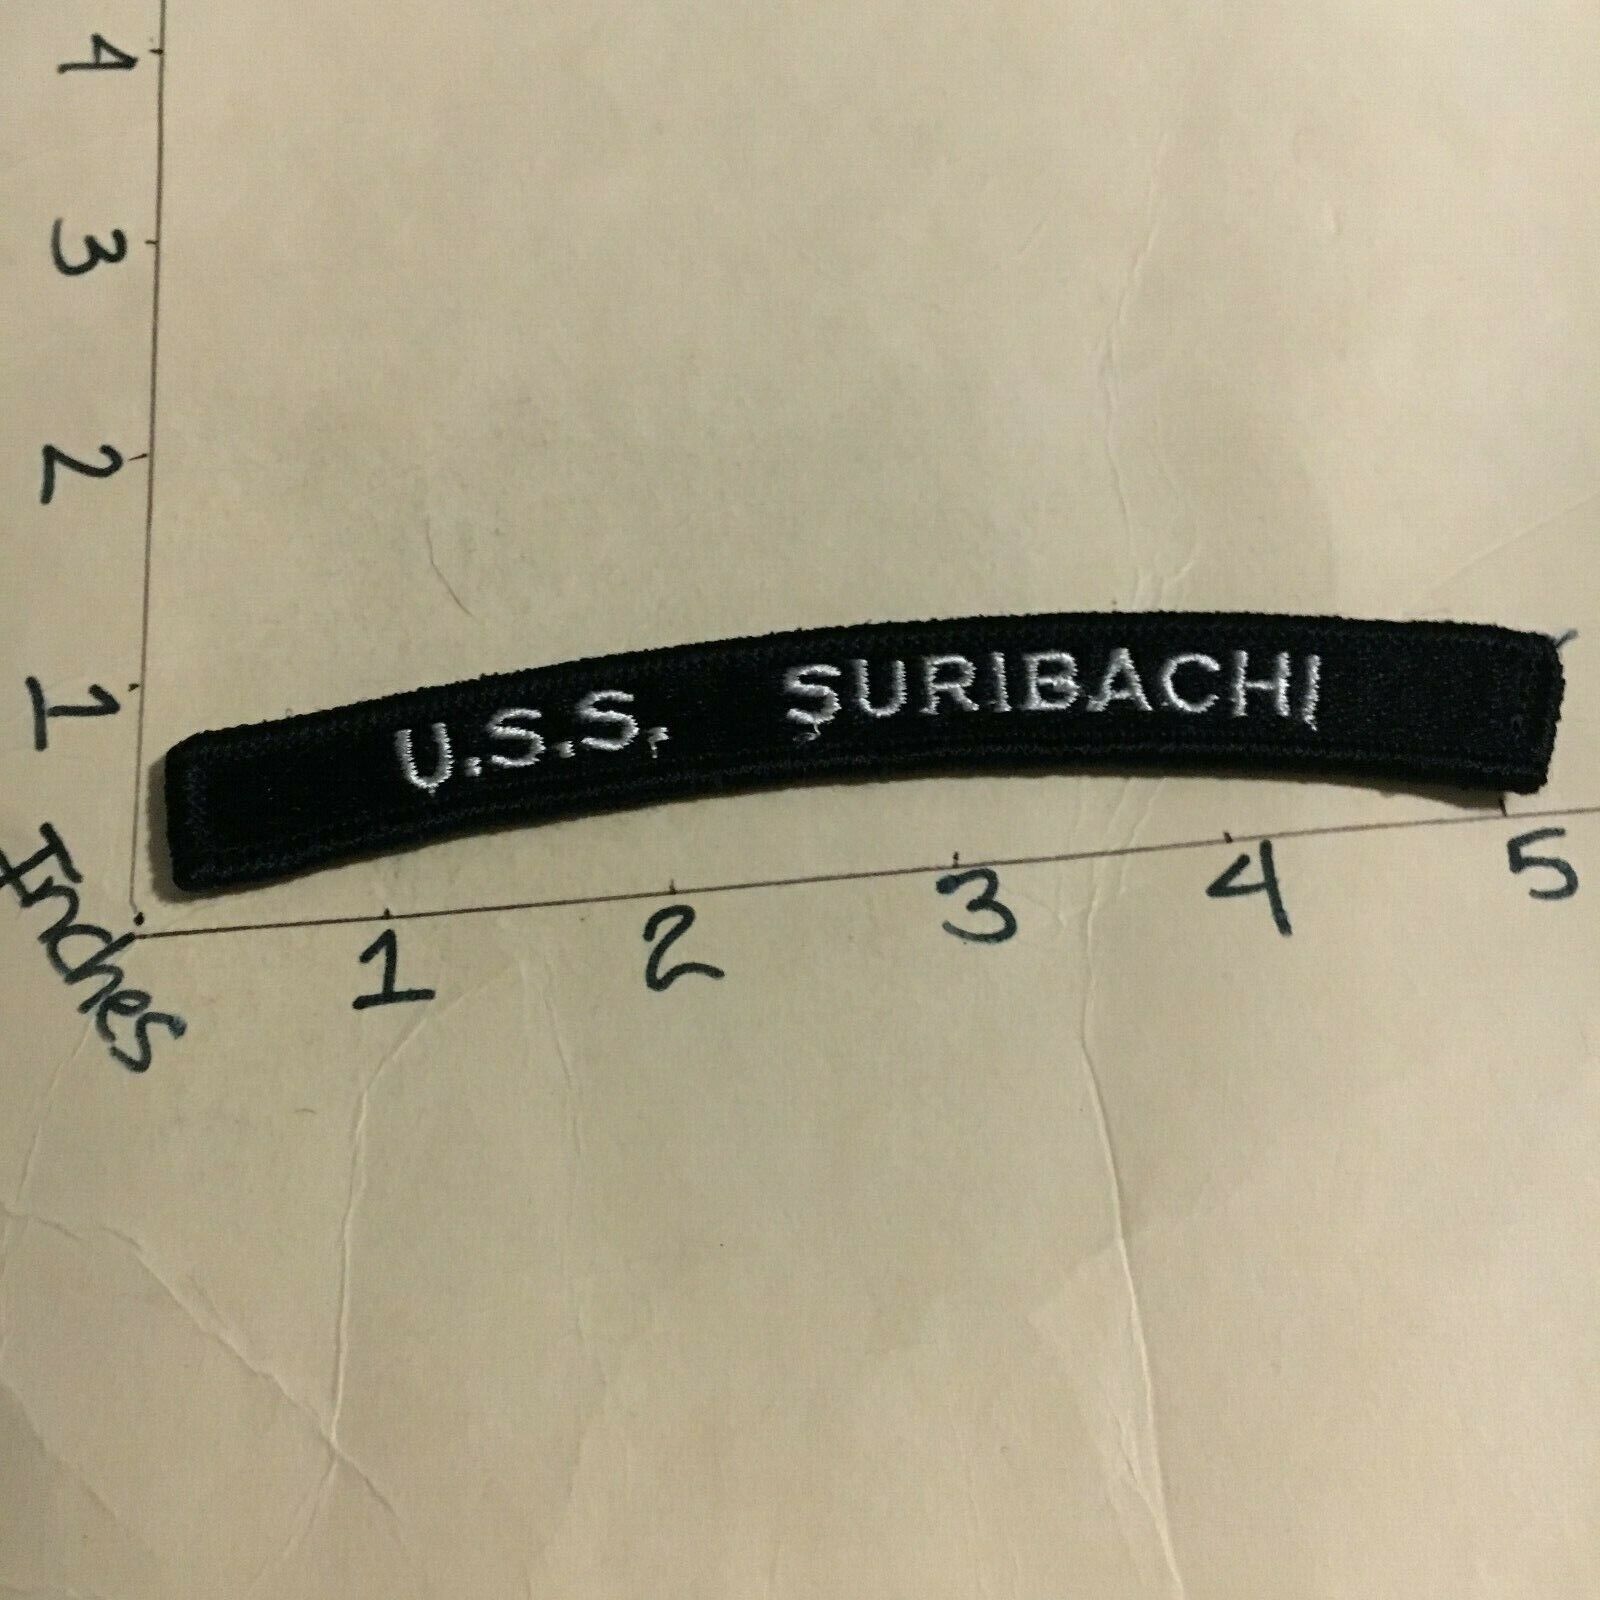 US NAVY SHOULDER STRIP TAB rocker Patch USS SURIBACHI